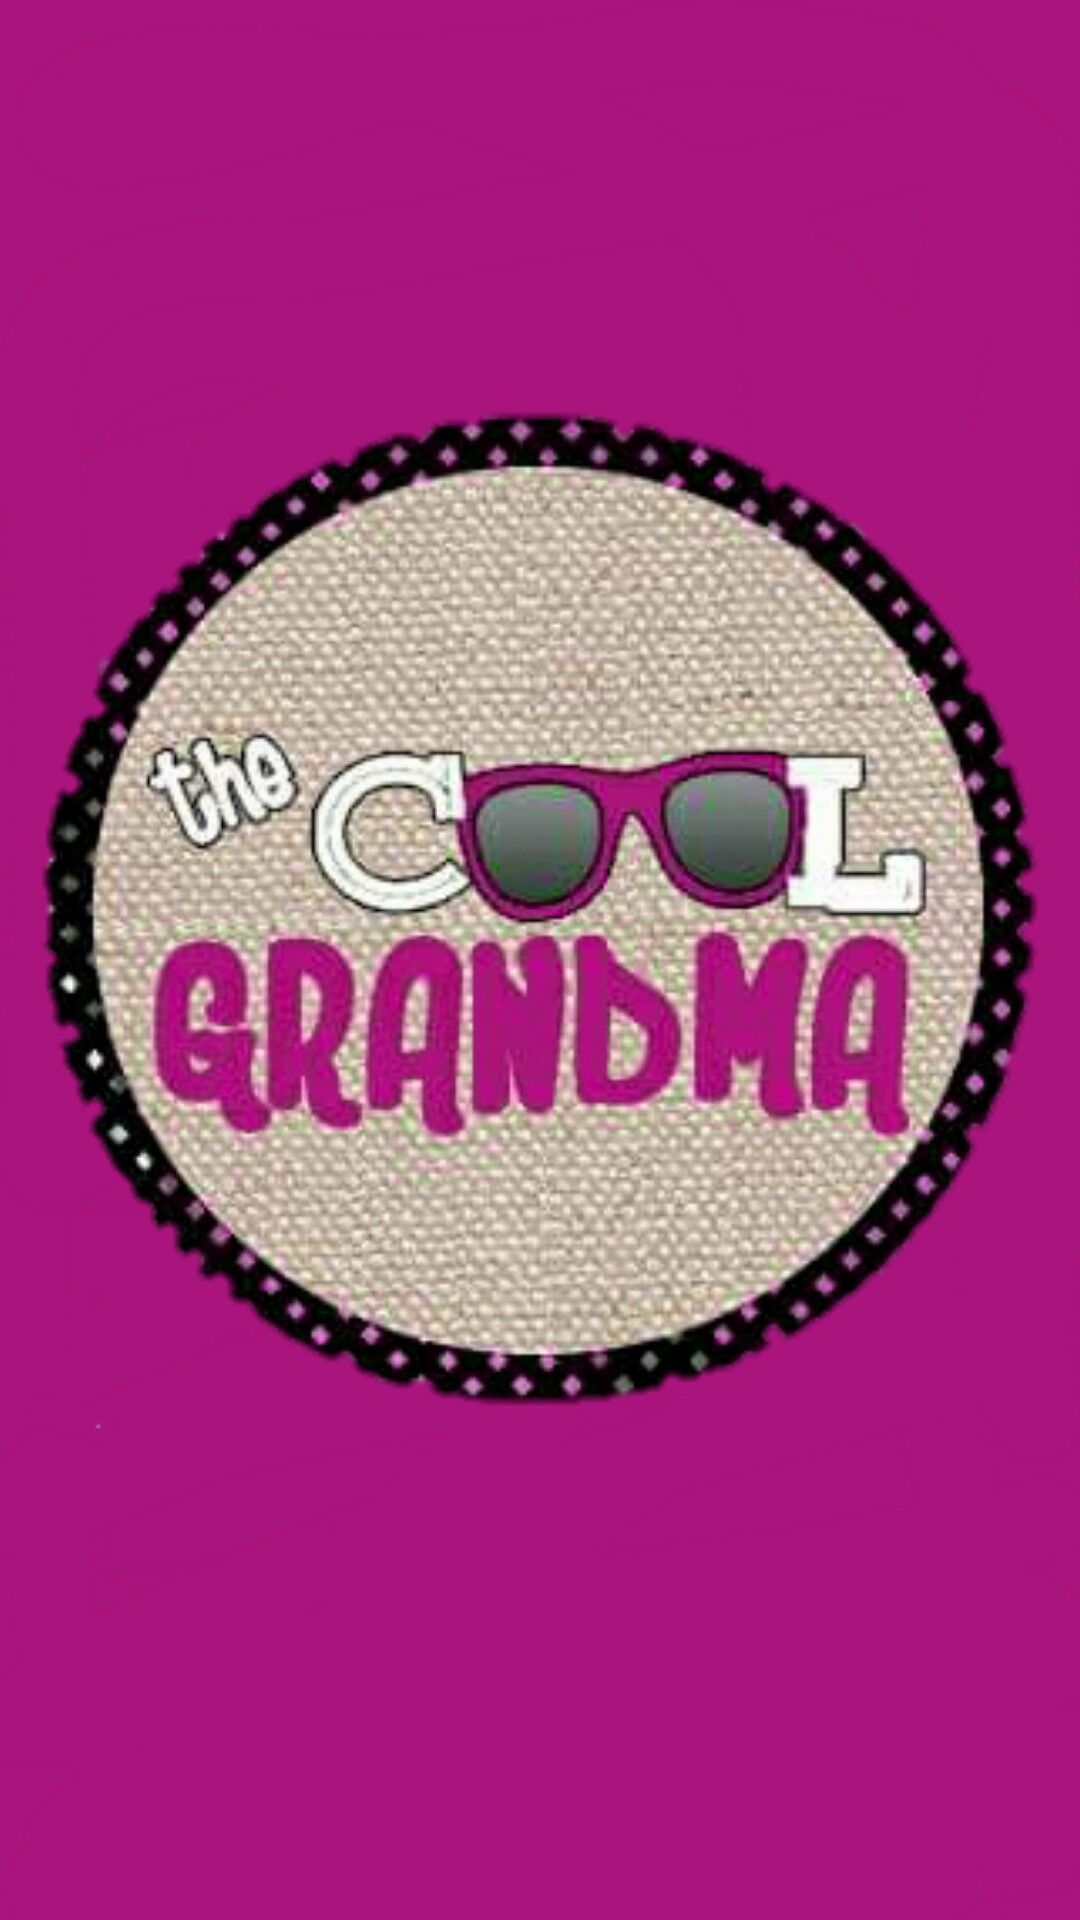 ✿**✿*W.PHONE*✿**✿*. Grandmothers love, Grandma